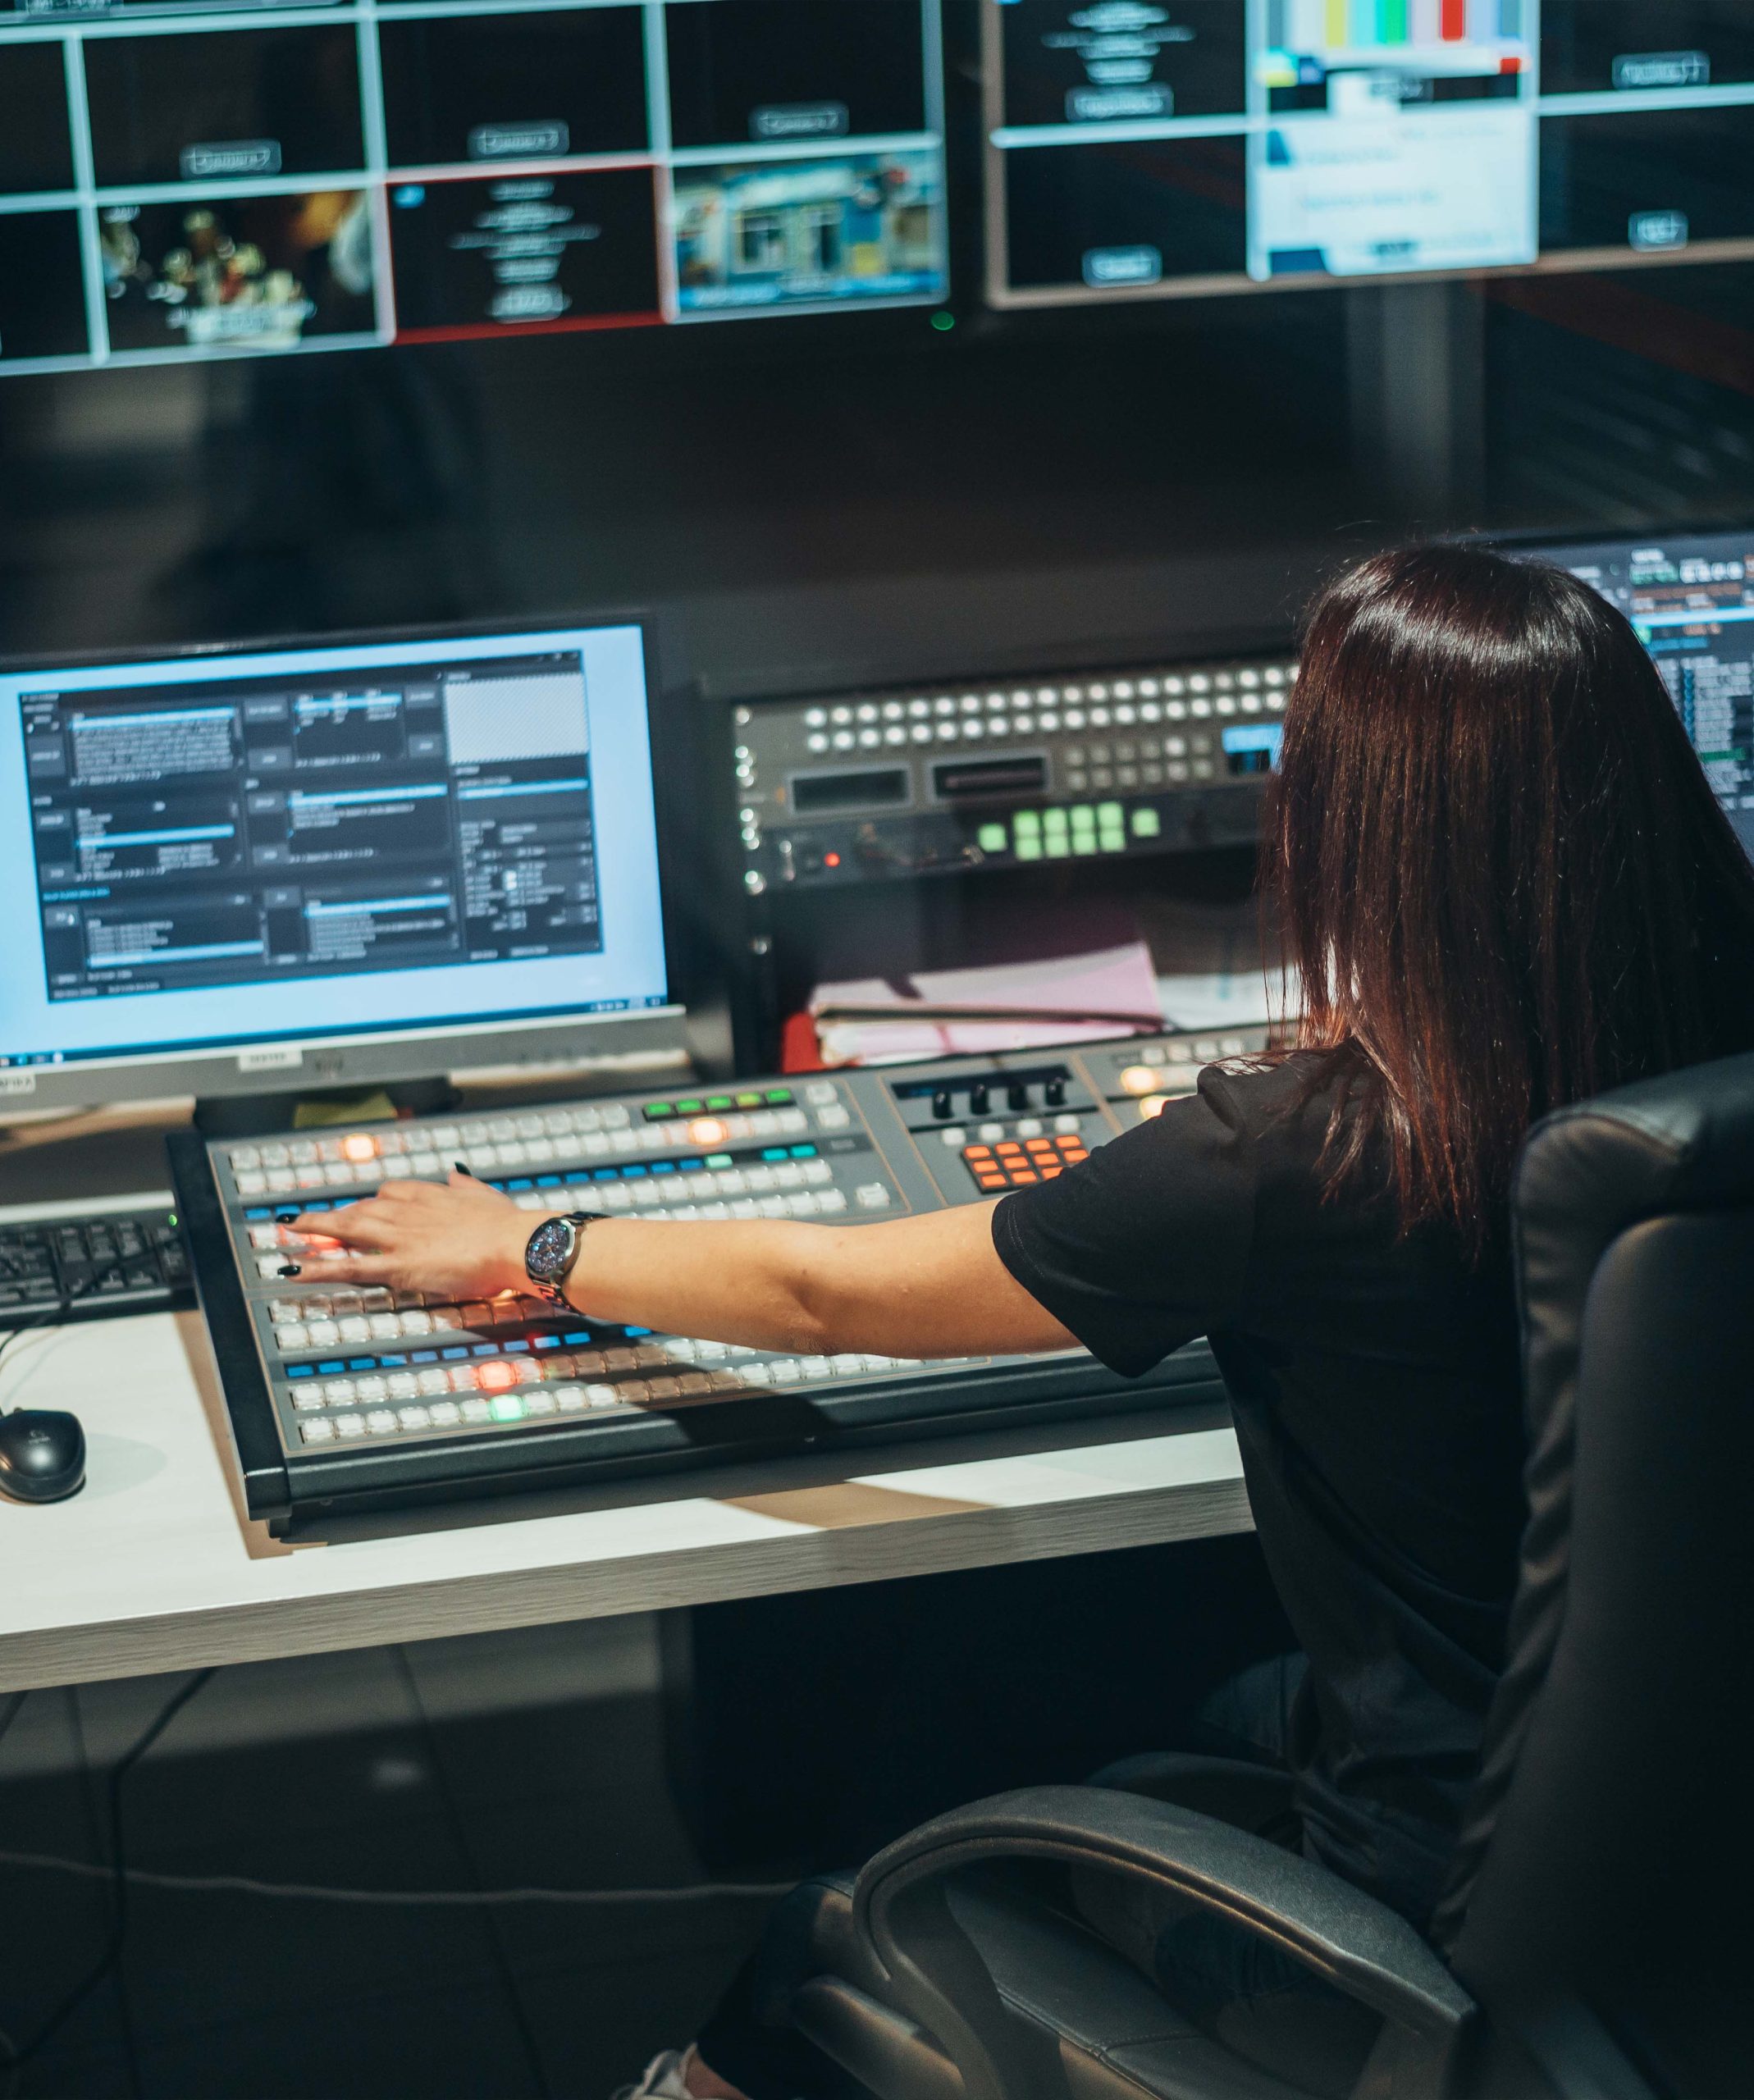 video production equipment editing bay software monitors